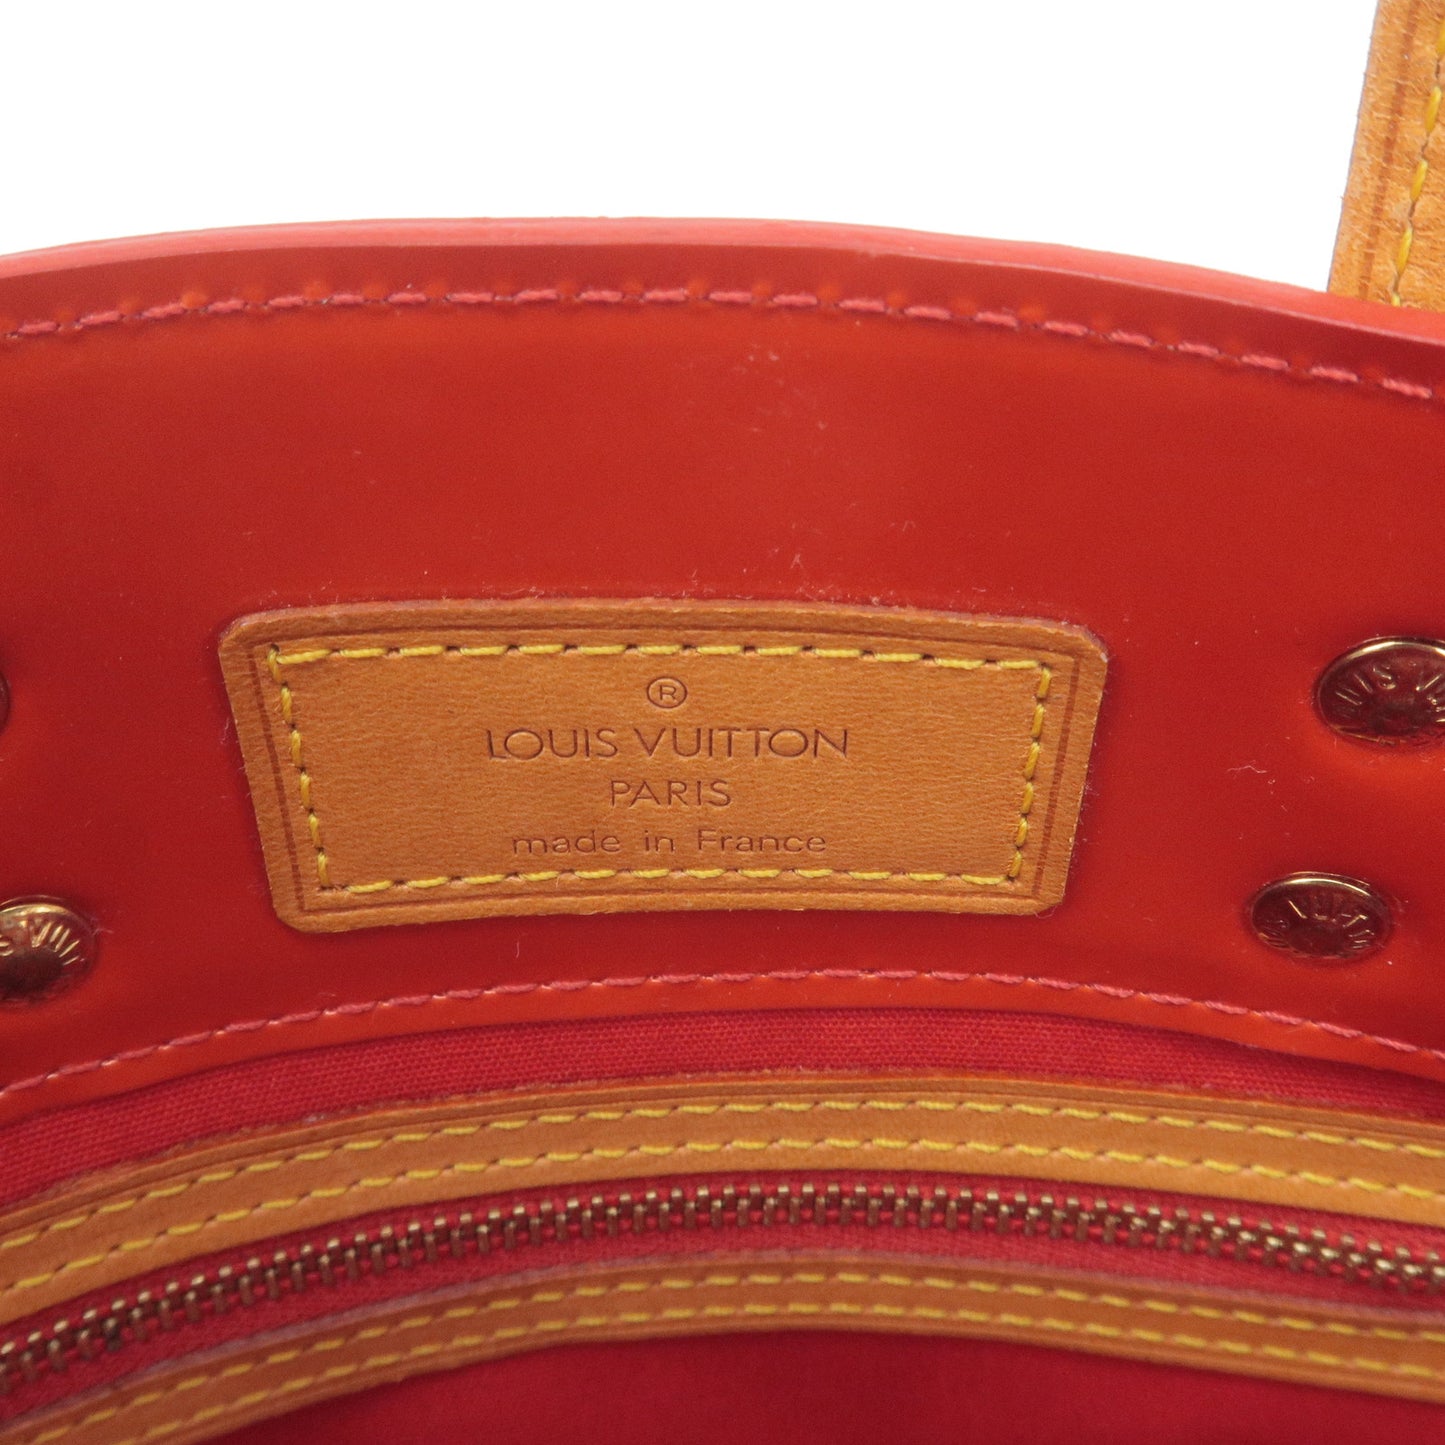 Louis-Vuitton-Monogram-Vernis-Lead-PM-Hand-Bag-Red-M91990